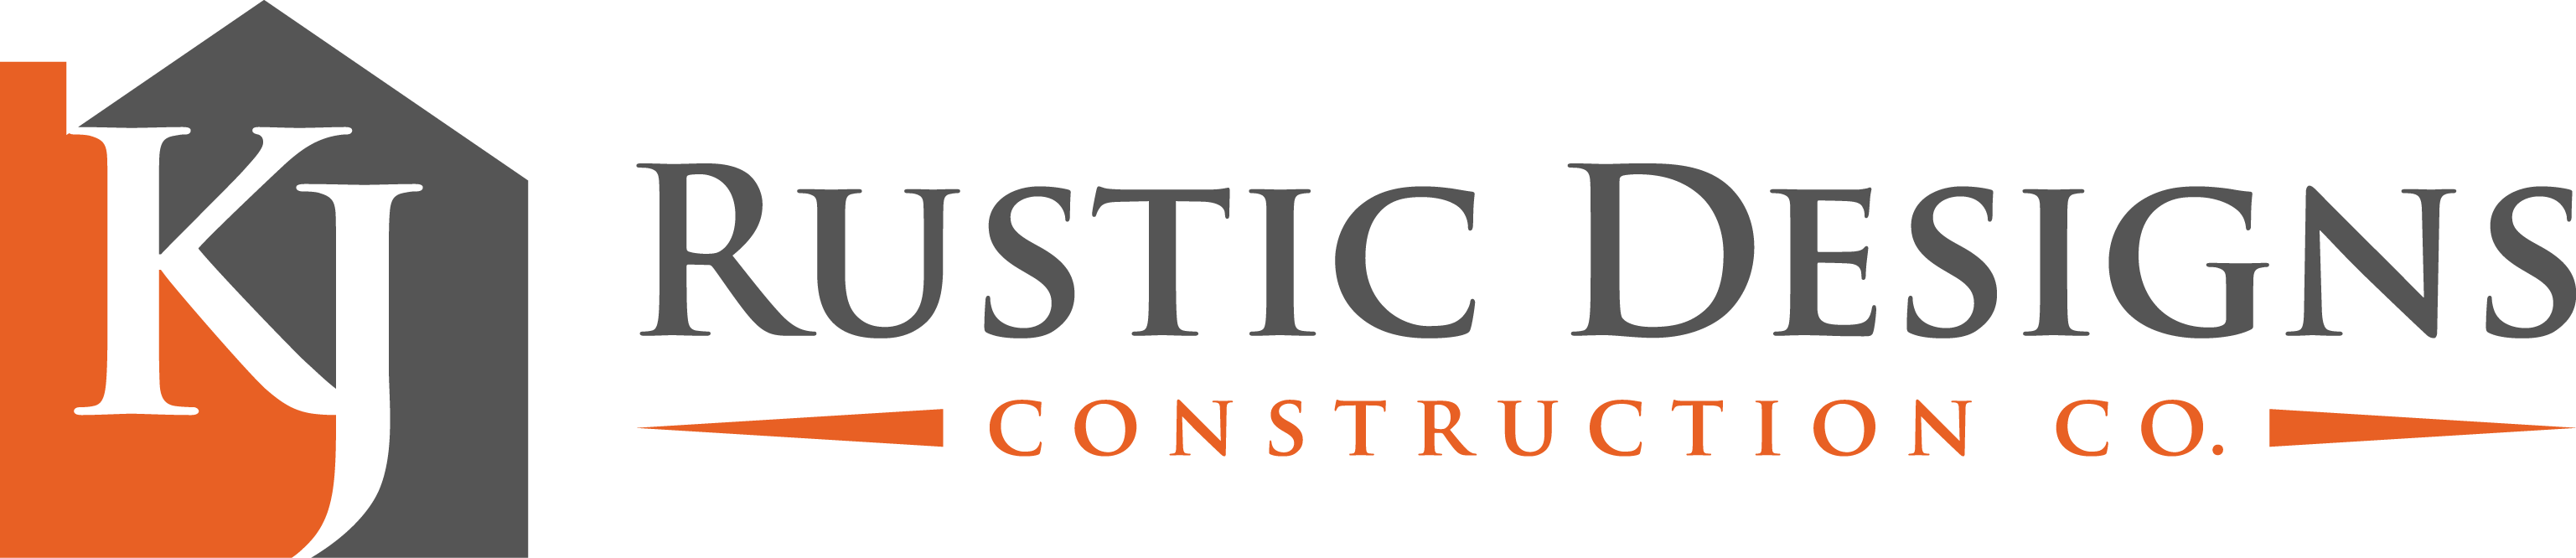 Rustic Construction Logo - KJ Rustic Designs - Commercial & Residential Construction